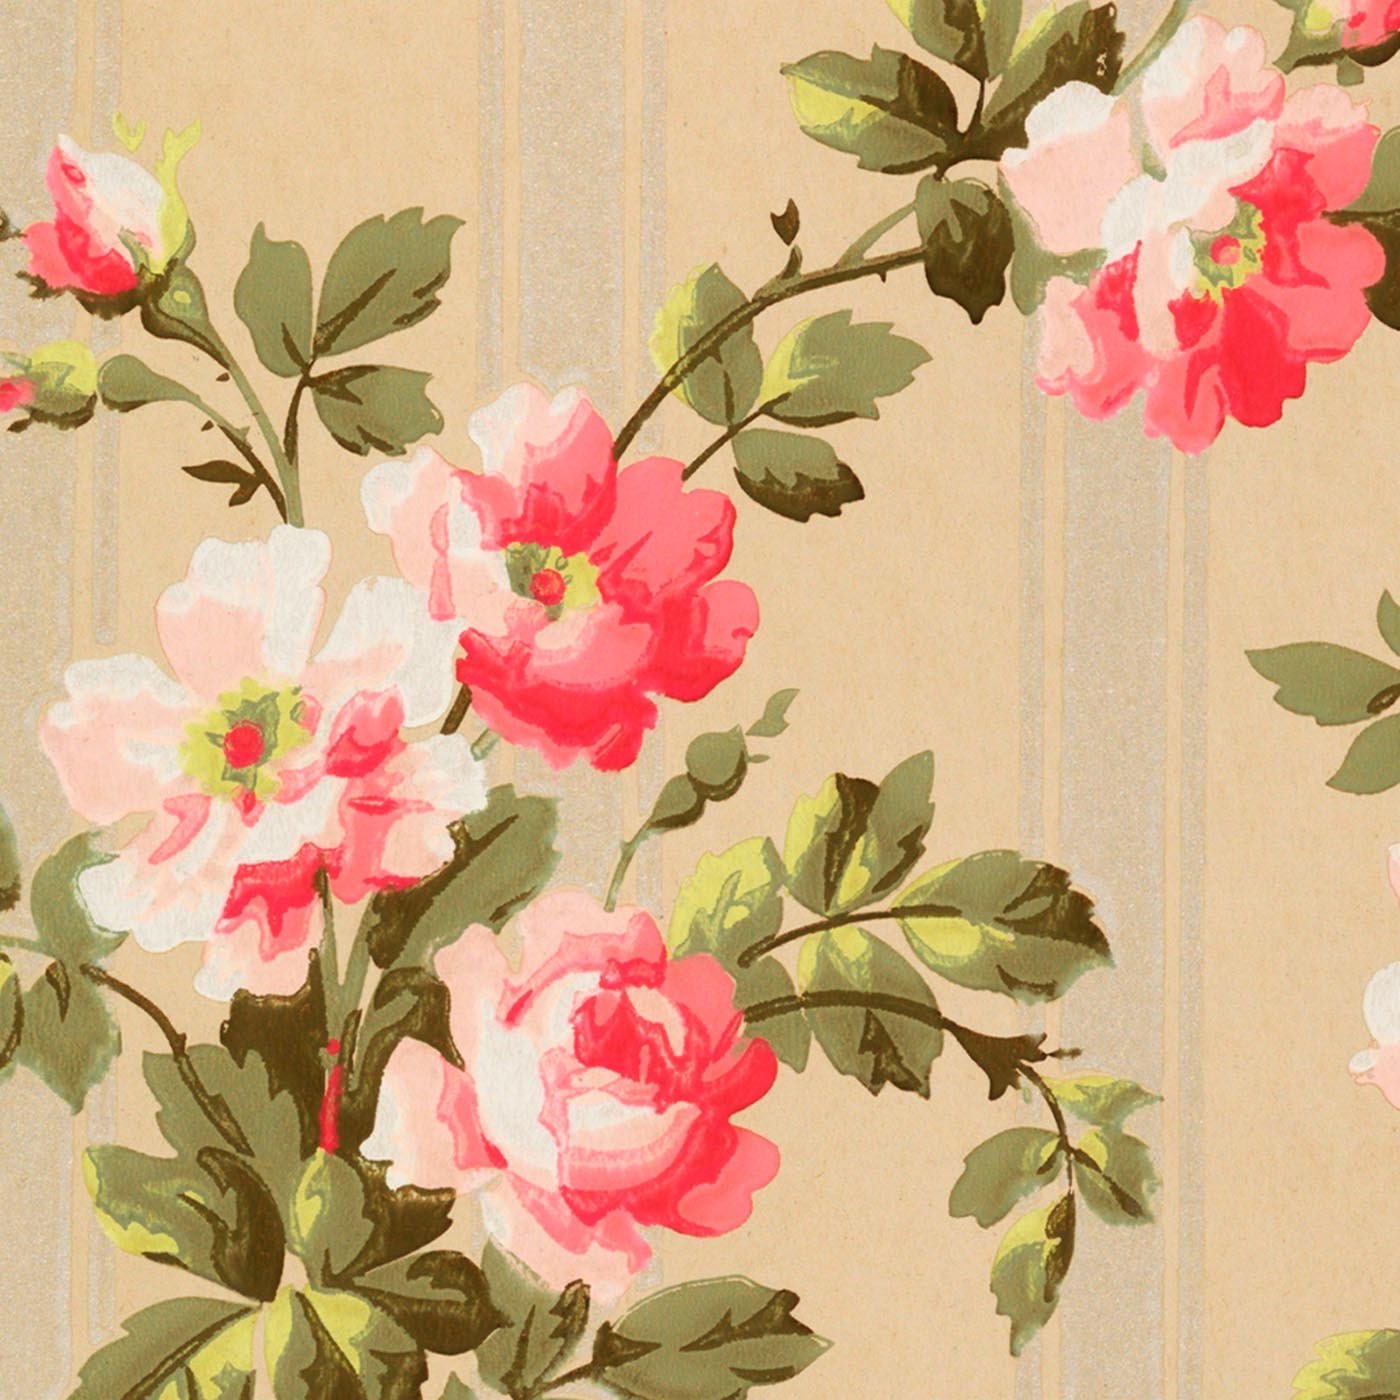 William Morris Vintage Rose Wallpaper Art Exhibition Poster